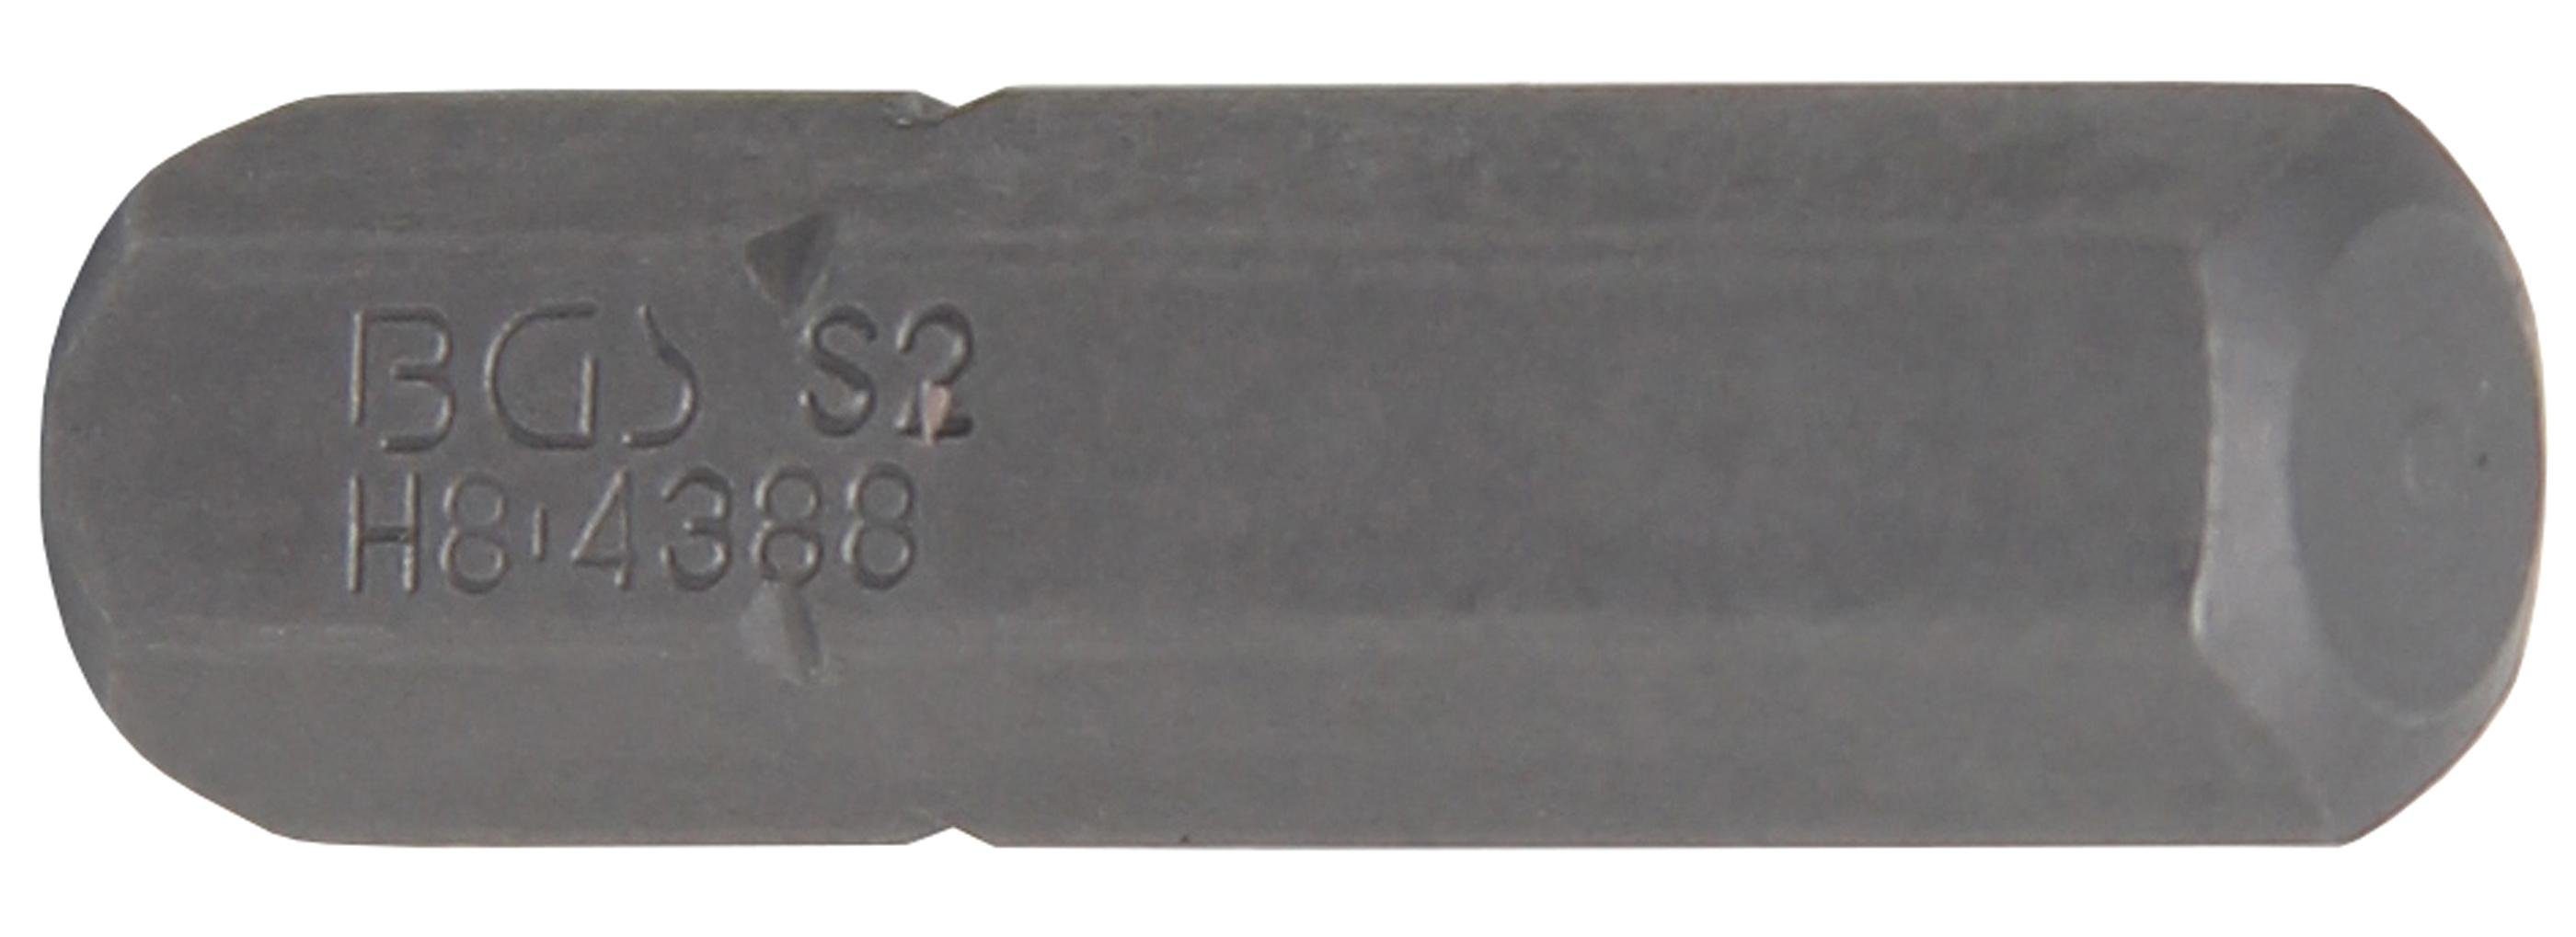 mm technic Antrieb Bit, Innensechskant 8 BGS mm 8 Sechskant-Bit Außensechskant (5/16),